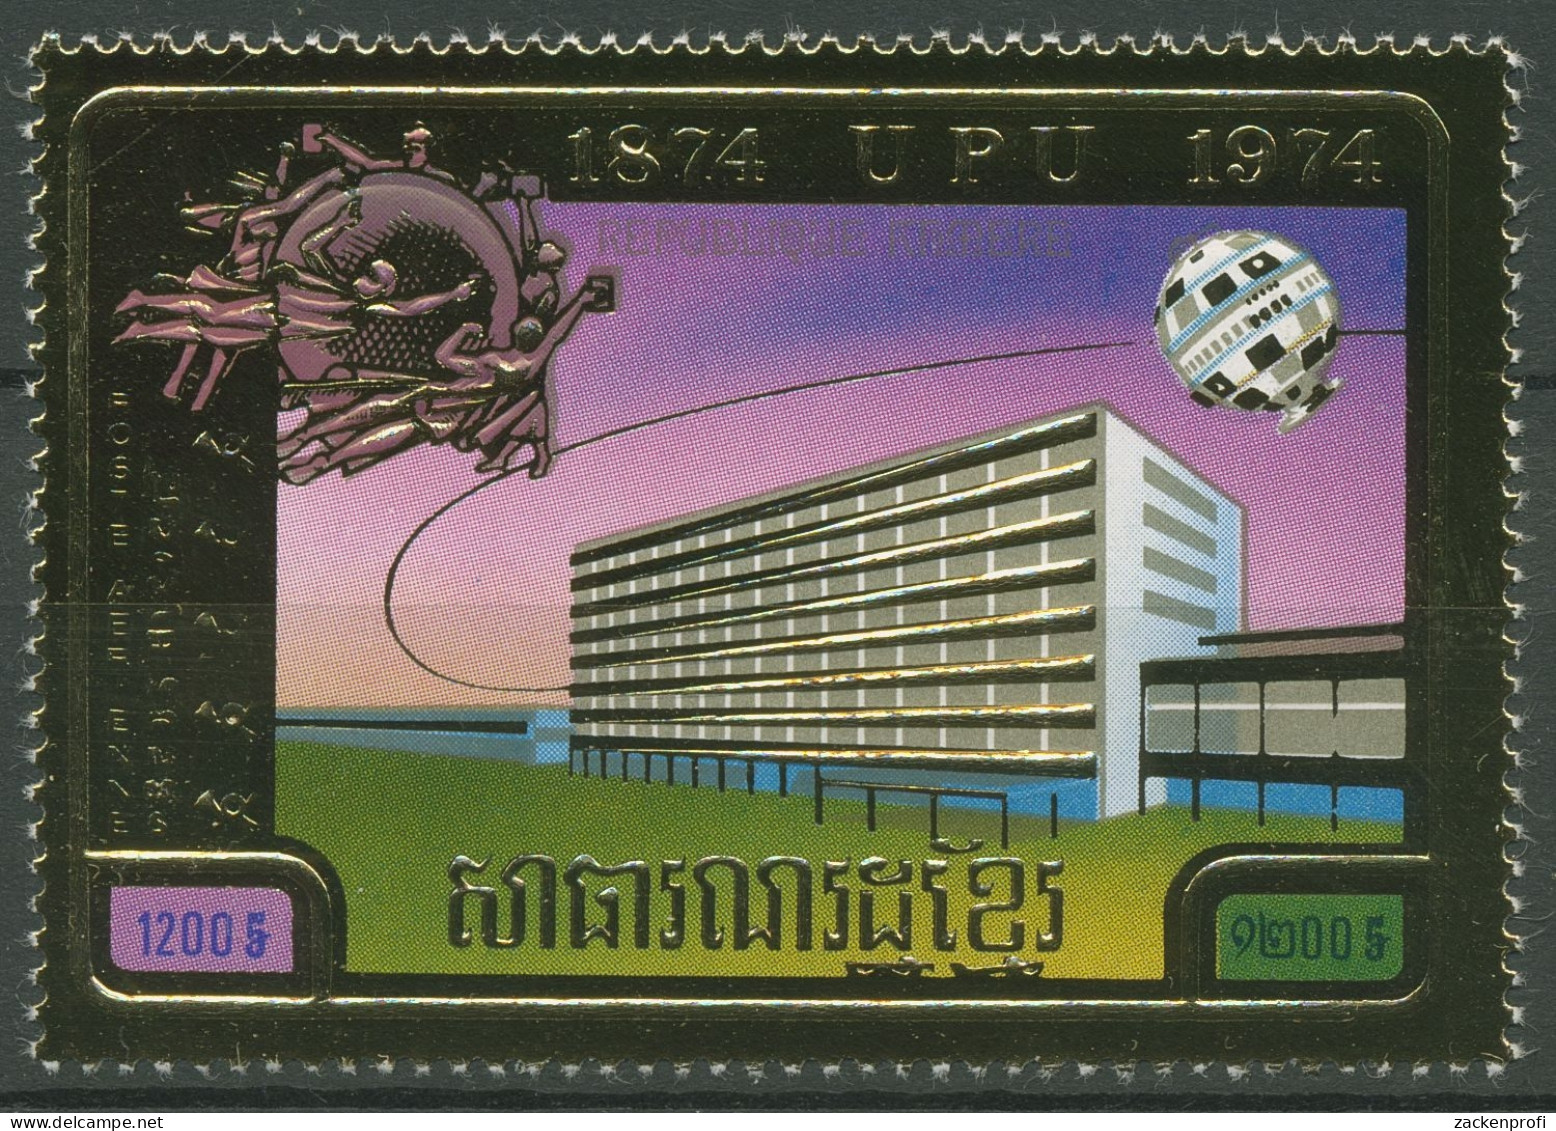 Kambodscha 1974 Weltpostverein UPU 405 A Postfrisch - Cambodia